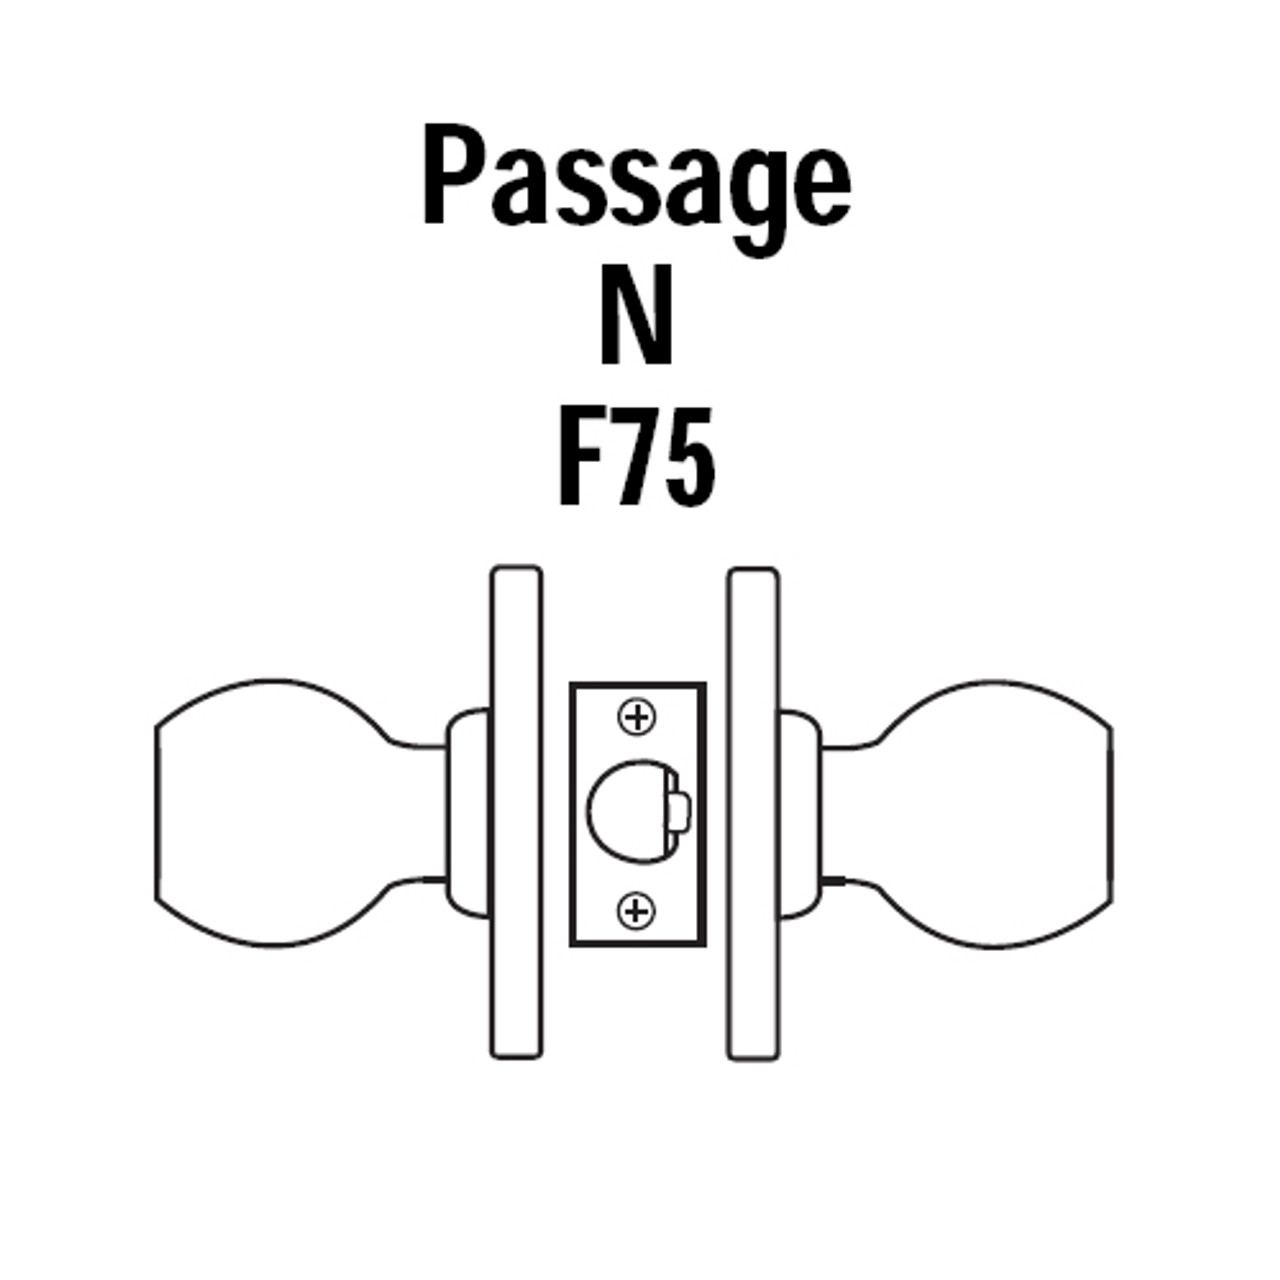 8K30N6CS3626 Best 8K Series Passage Heavy Duty Cylindrical Knob Locks with Tulip Style in Satin Chrome